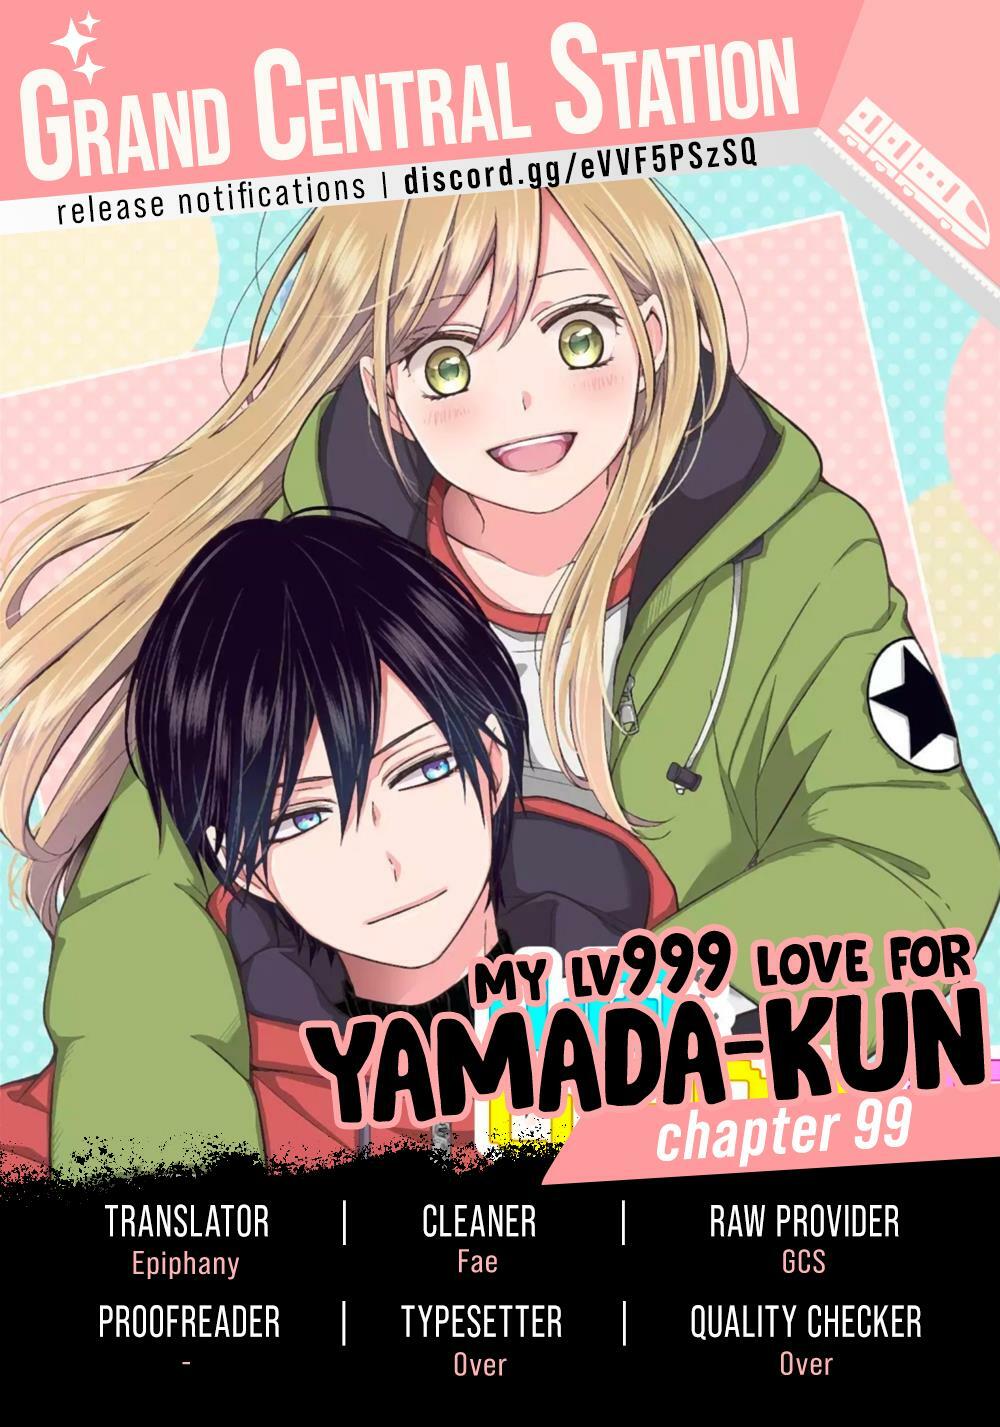 Volume 1, My Love Story with Yamada-kun at Lv999